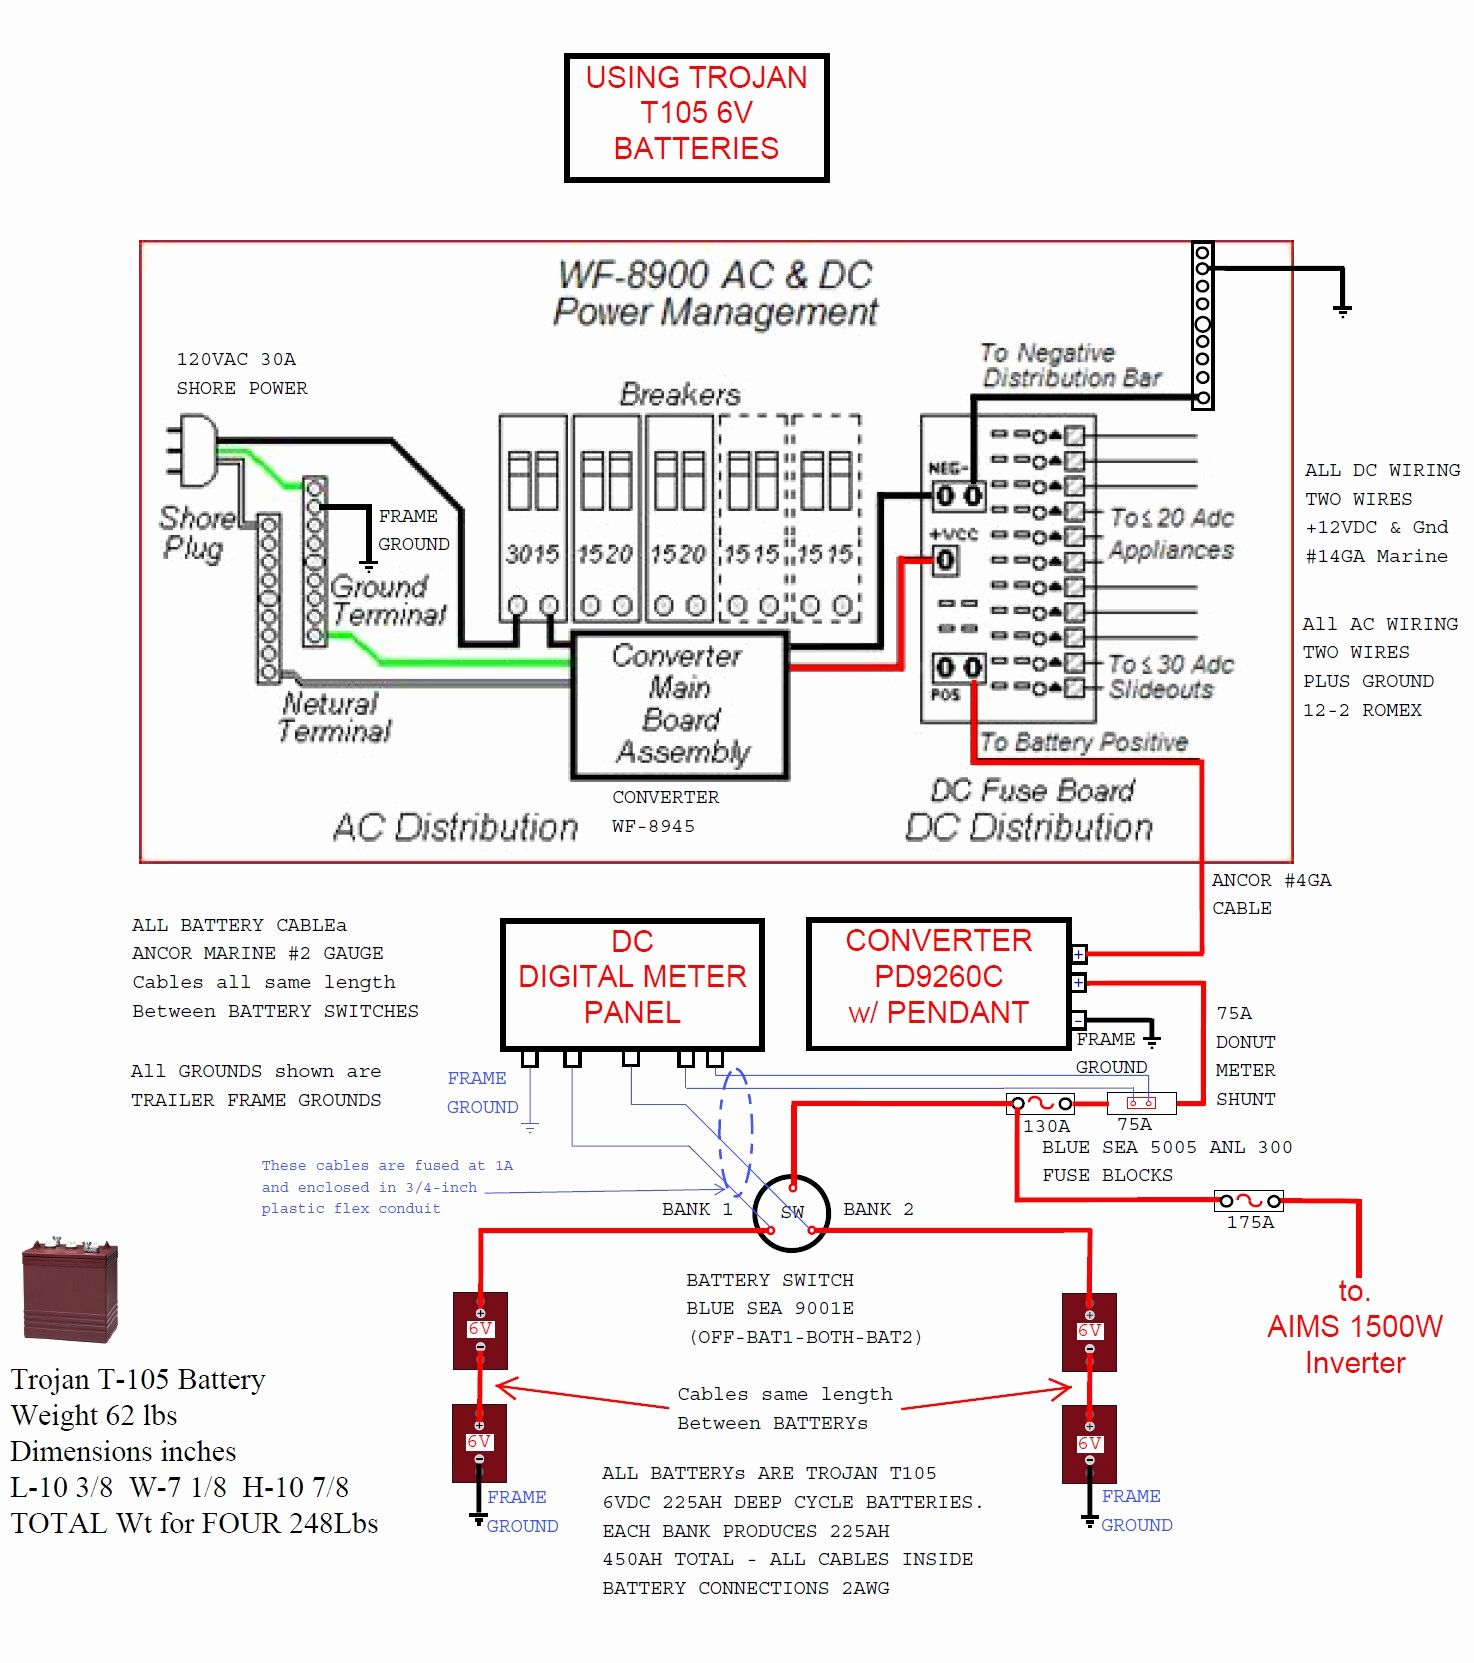 Wfco 55 Amp Power Converter Wiring Diagram | Wiring Diagram - Wfco 8955 Wiring Diagram